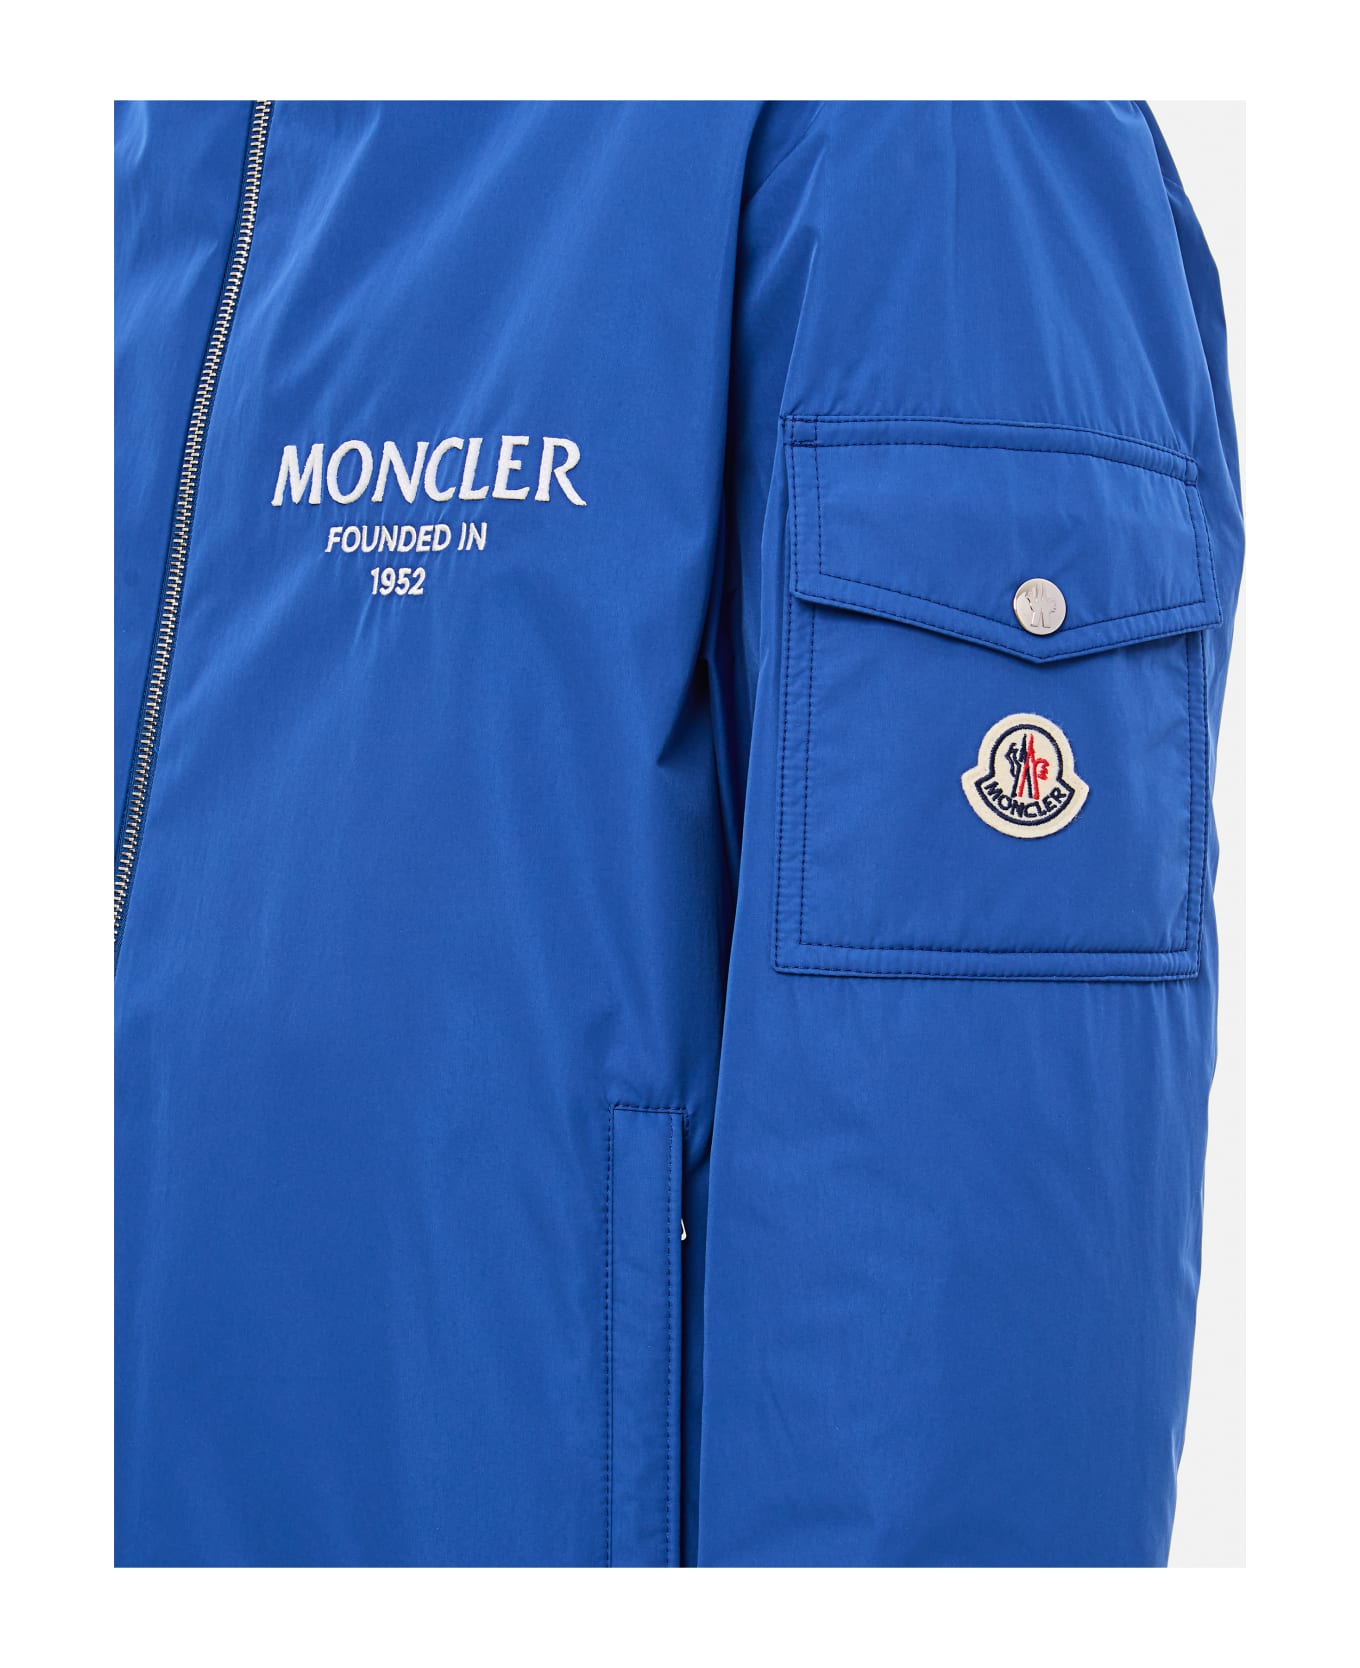 Moncler Granero Jacket - Clear Blue ジャケット